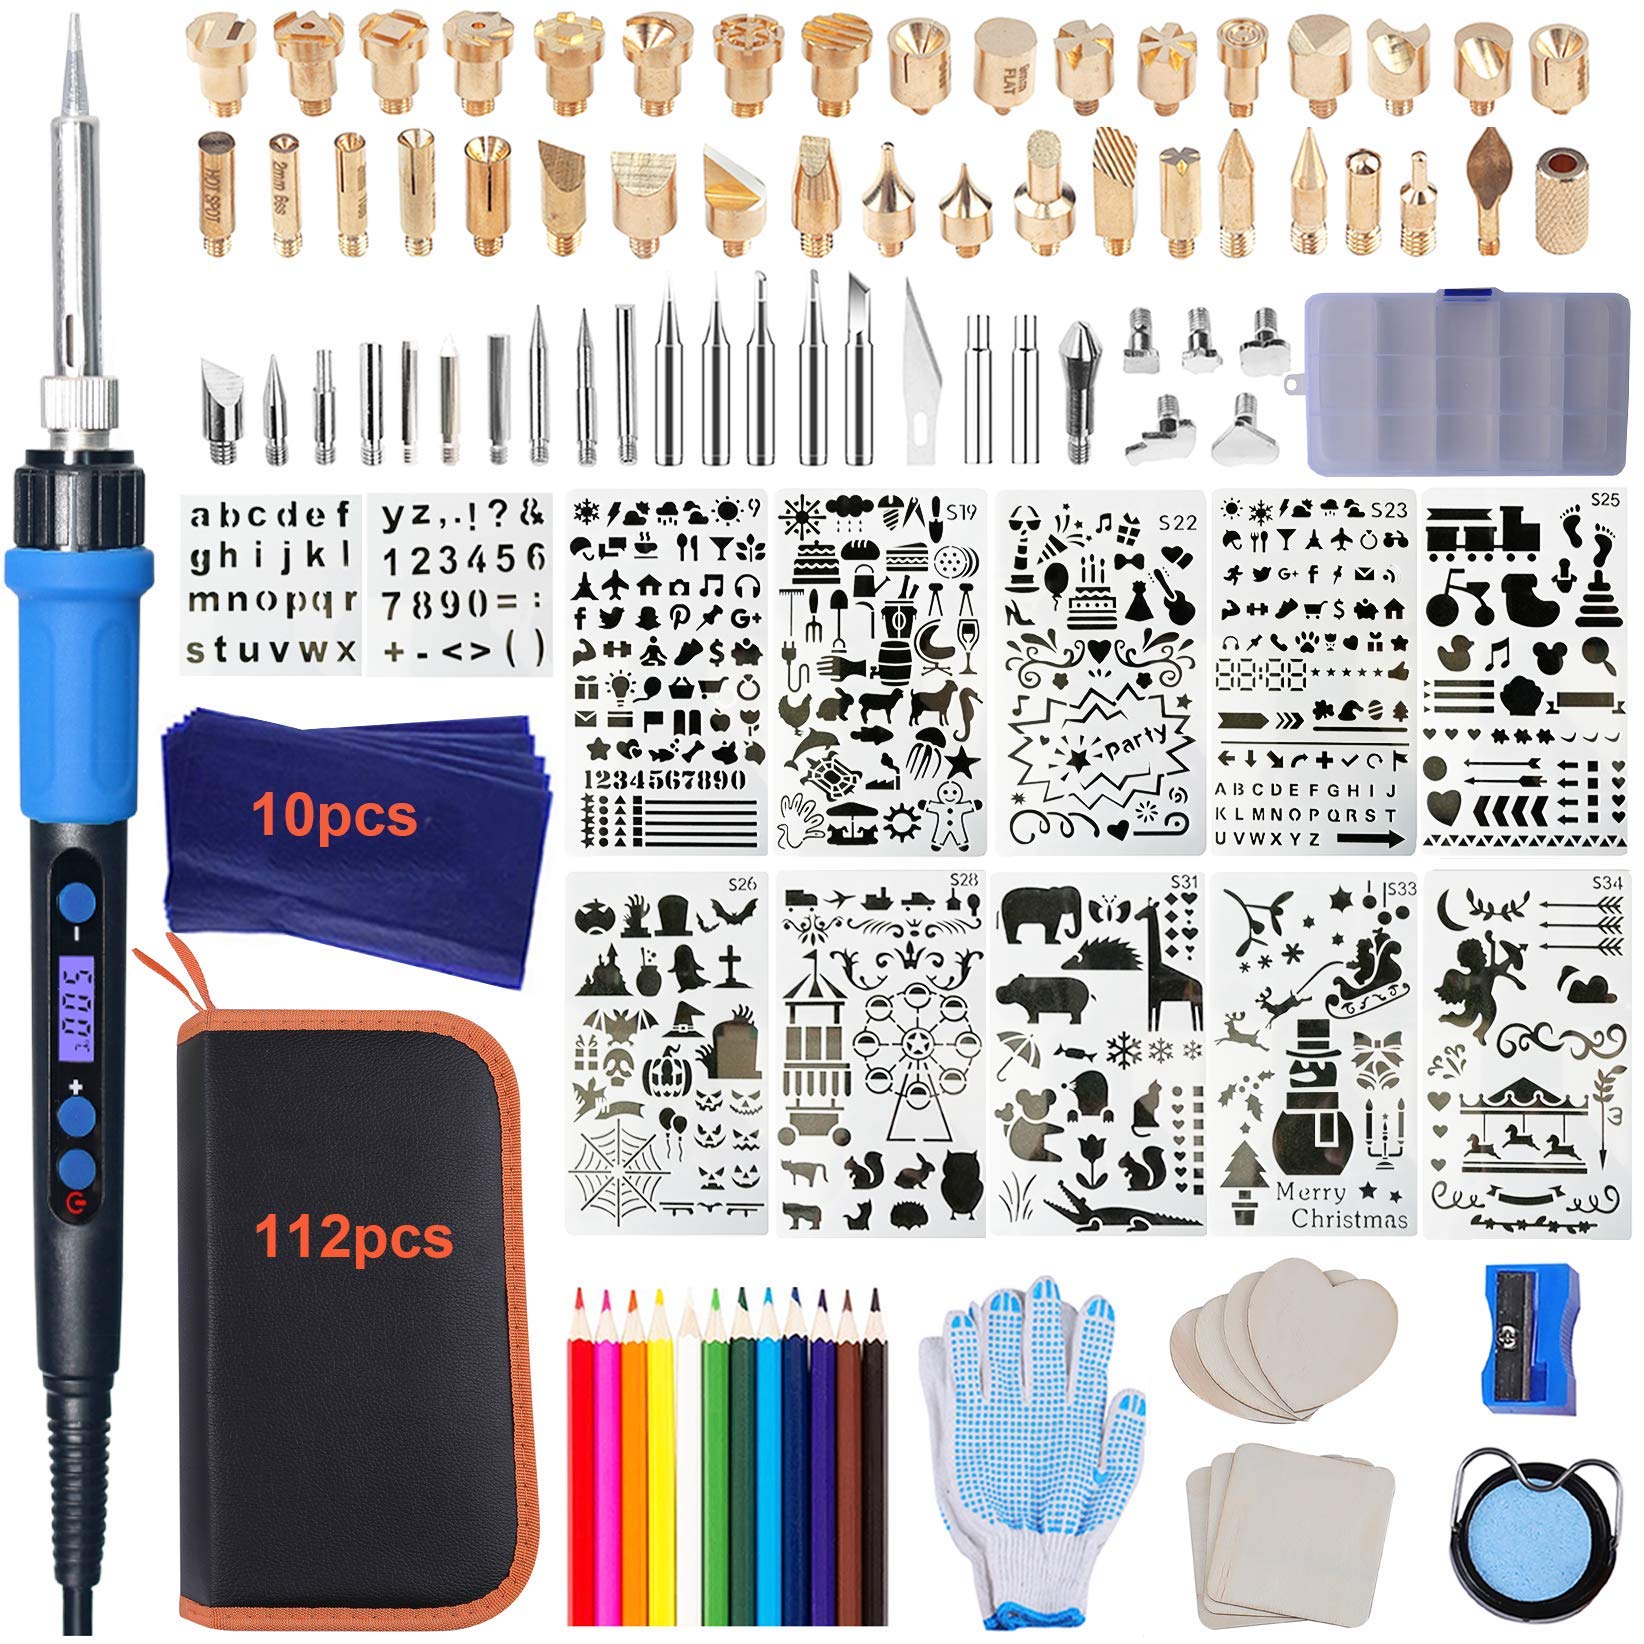 3 Pcs Stippling Kit Kit Kit Pyrograph Pen Tip Wood Burning Tips